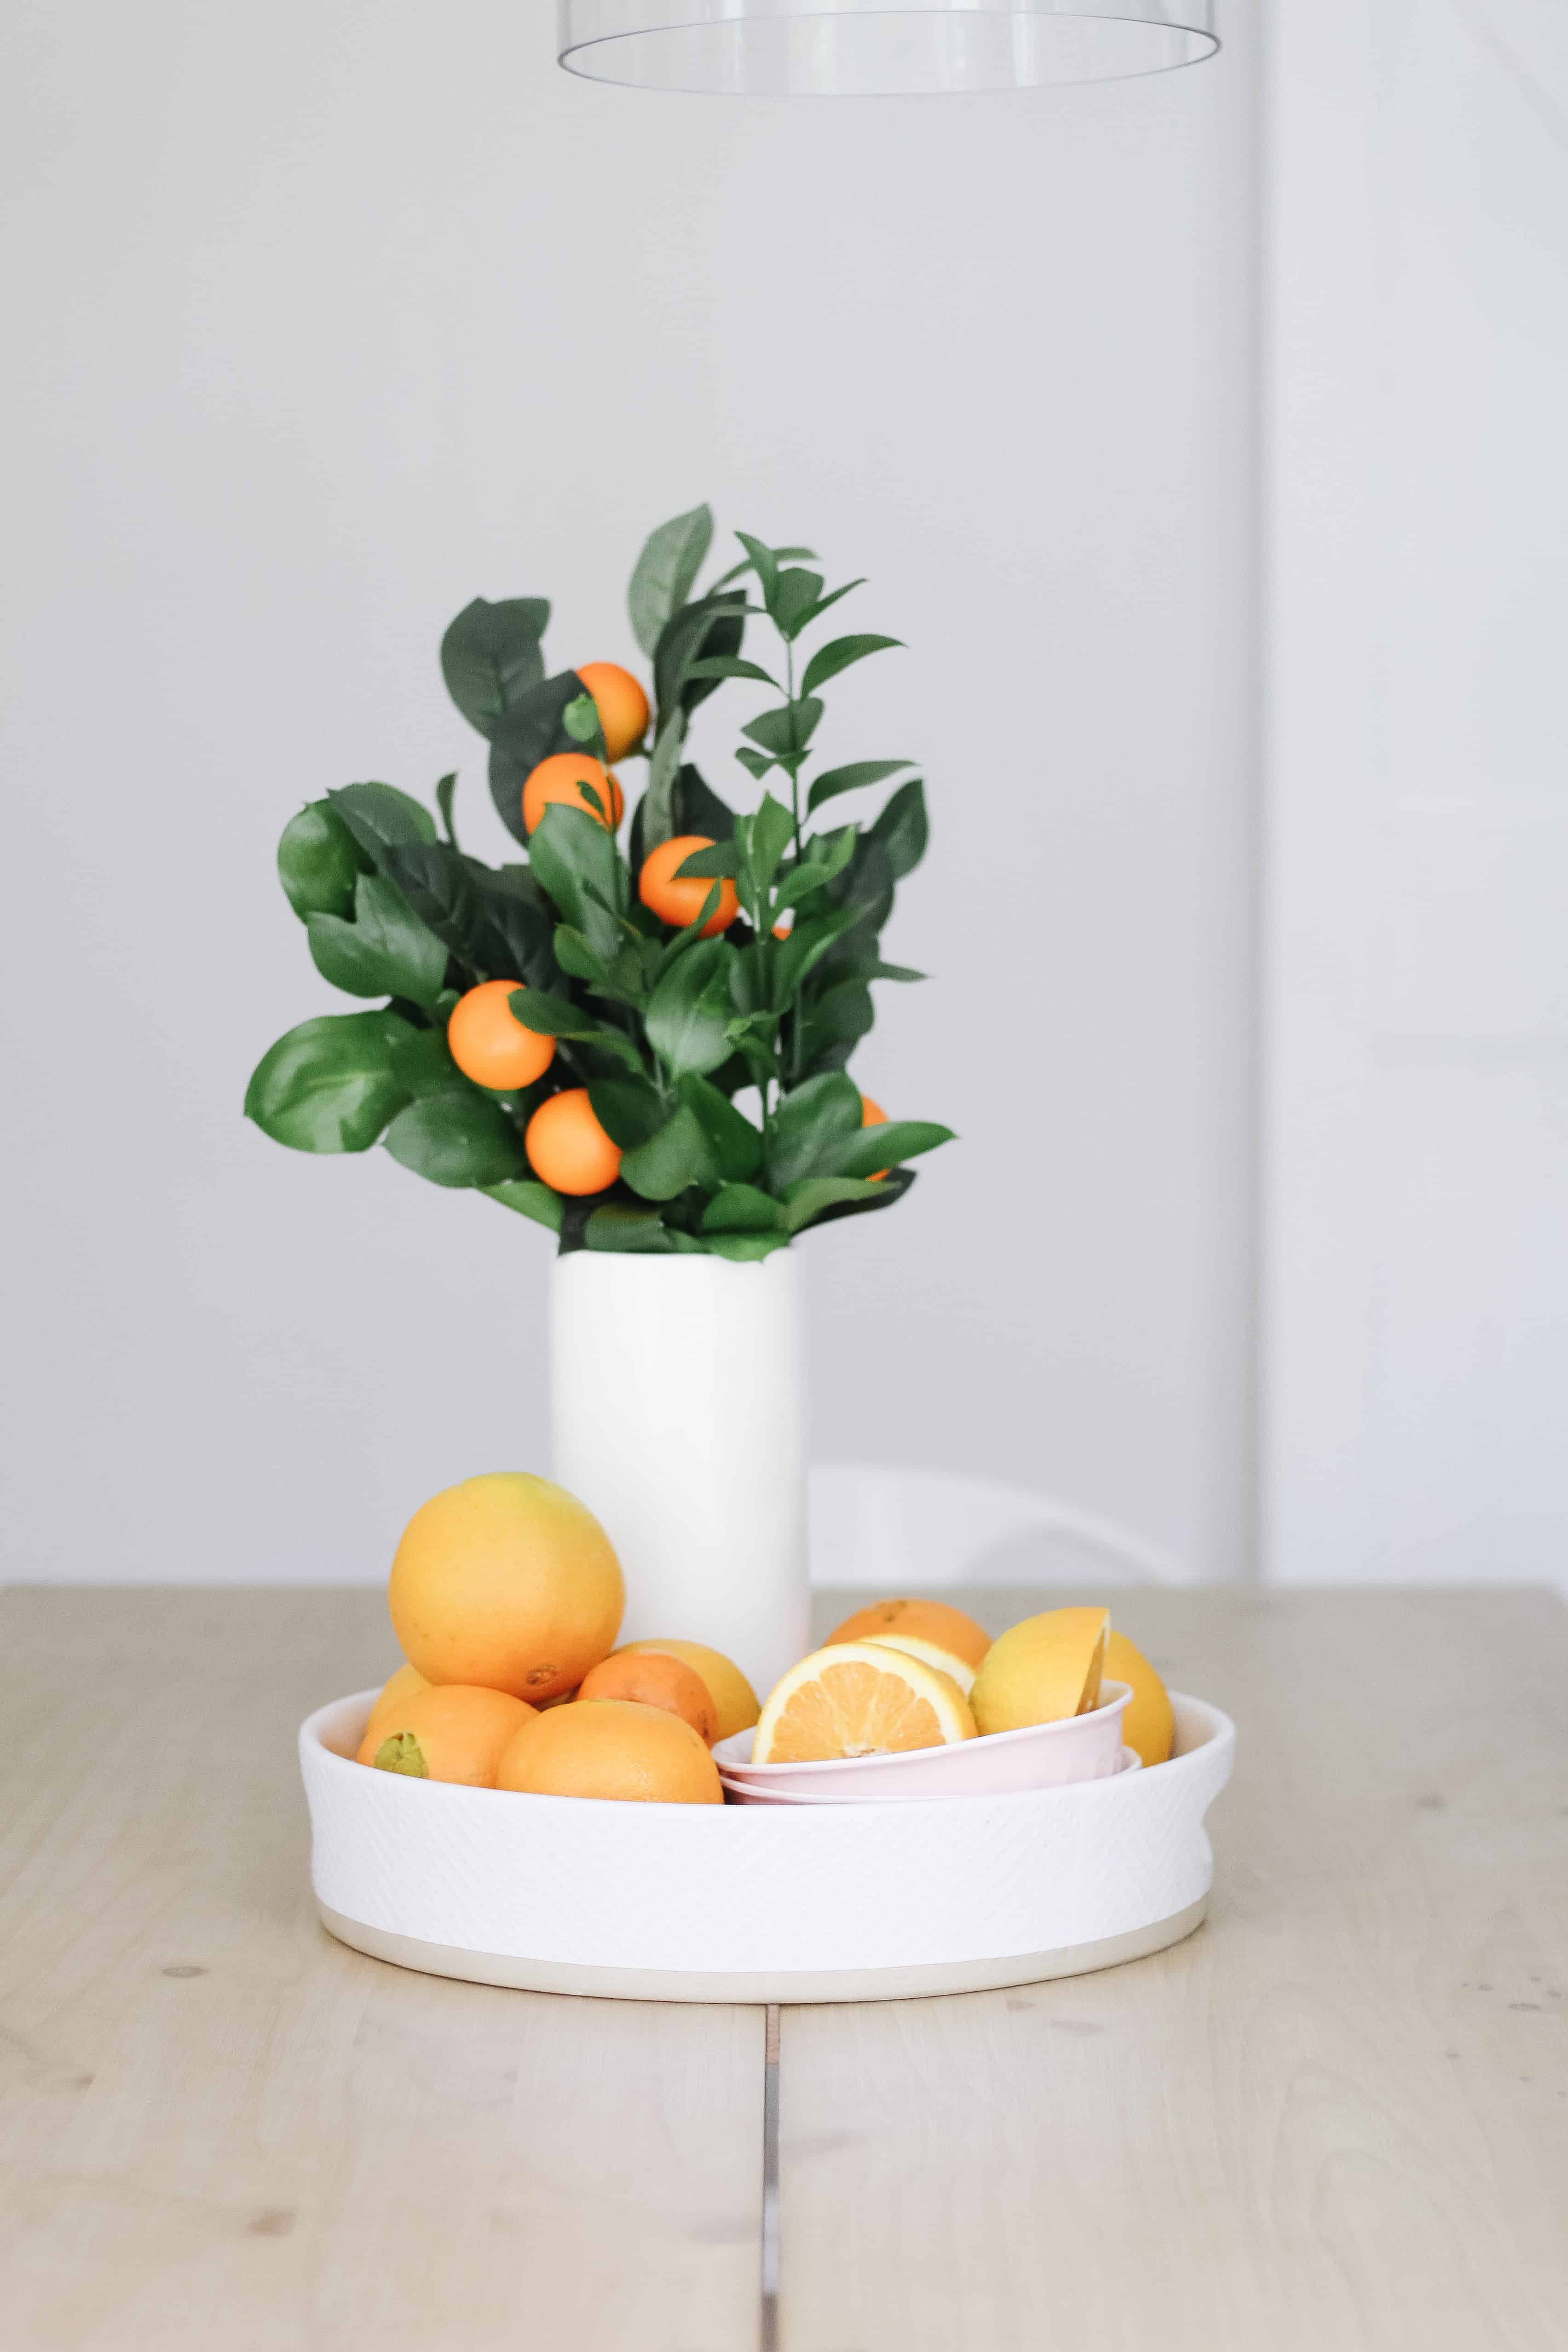 Orange centerpiece of oranges and greenery in vase